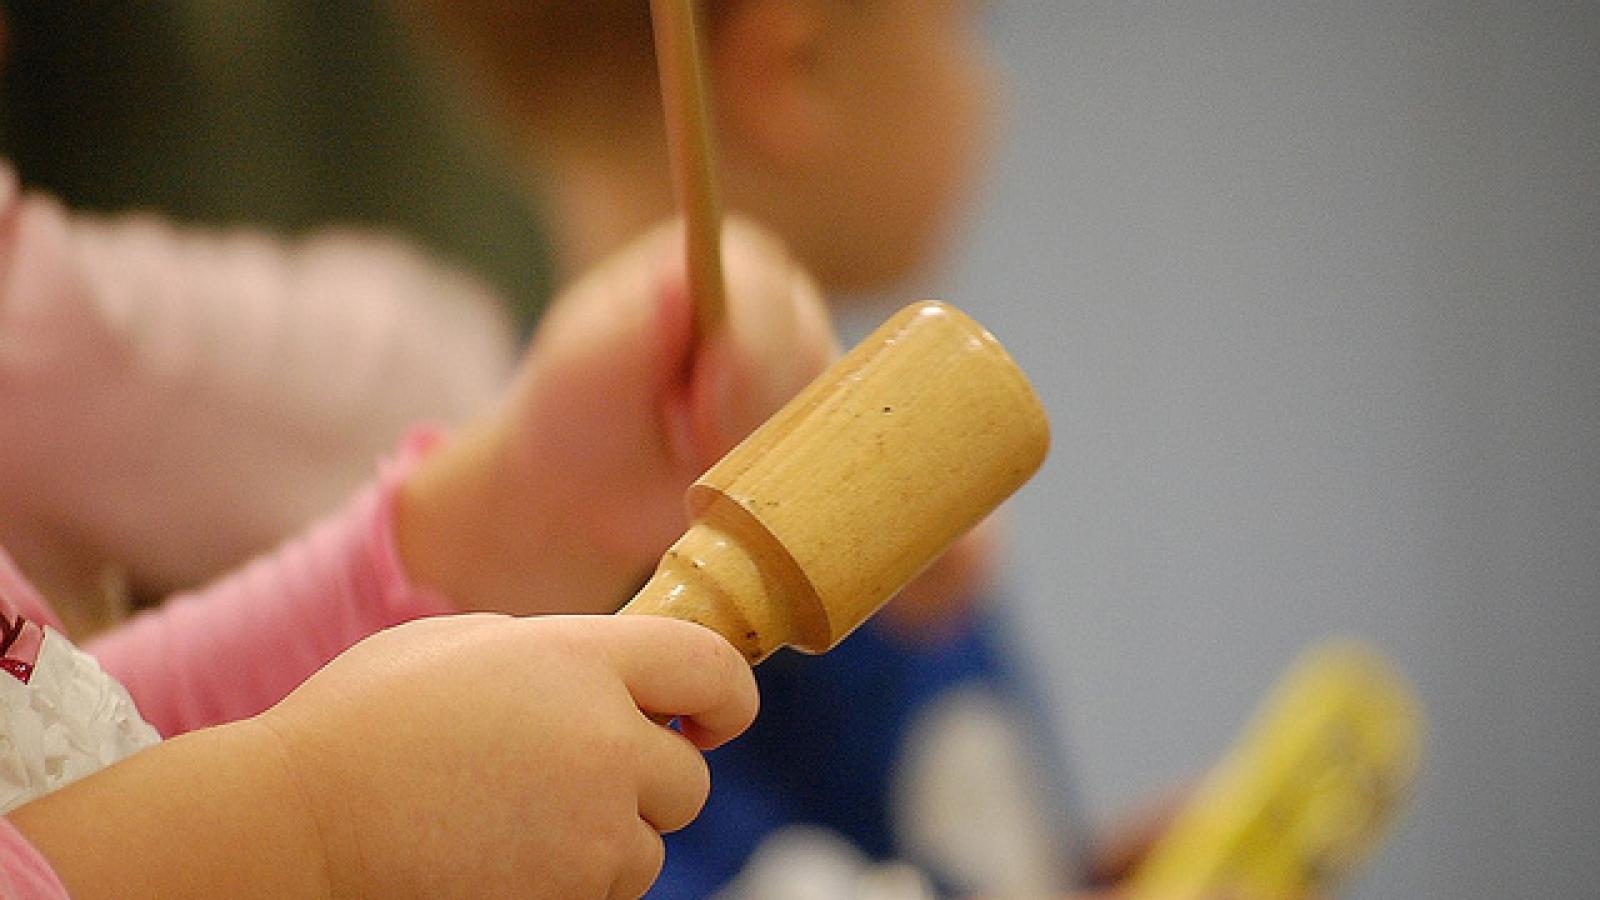 Children's hands playing instruments